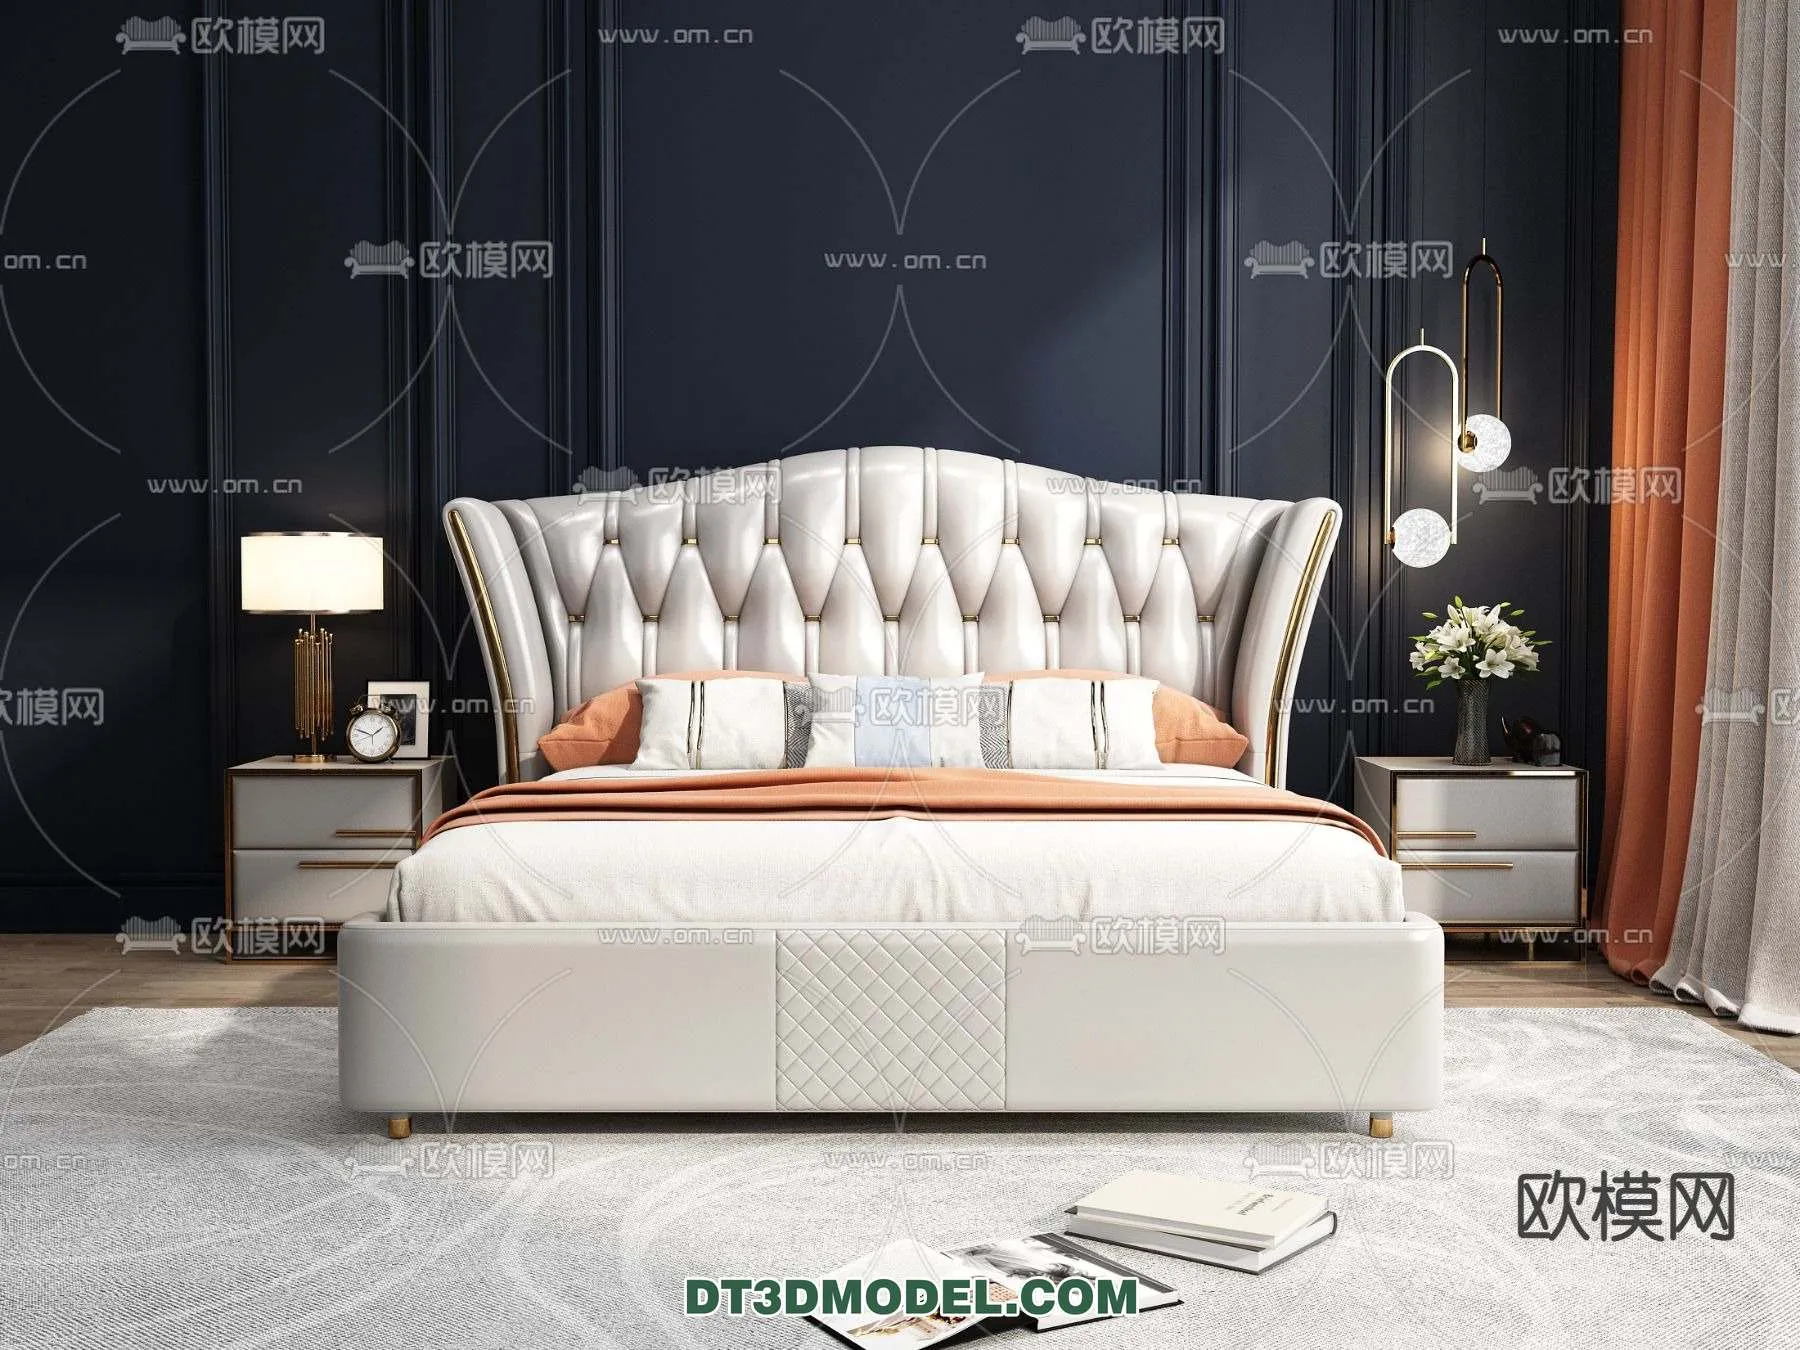 Double Bed 3D Models – 0048